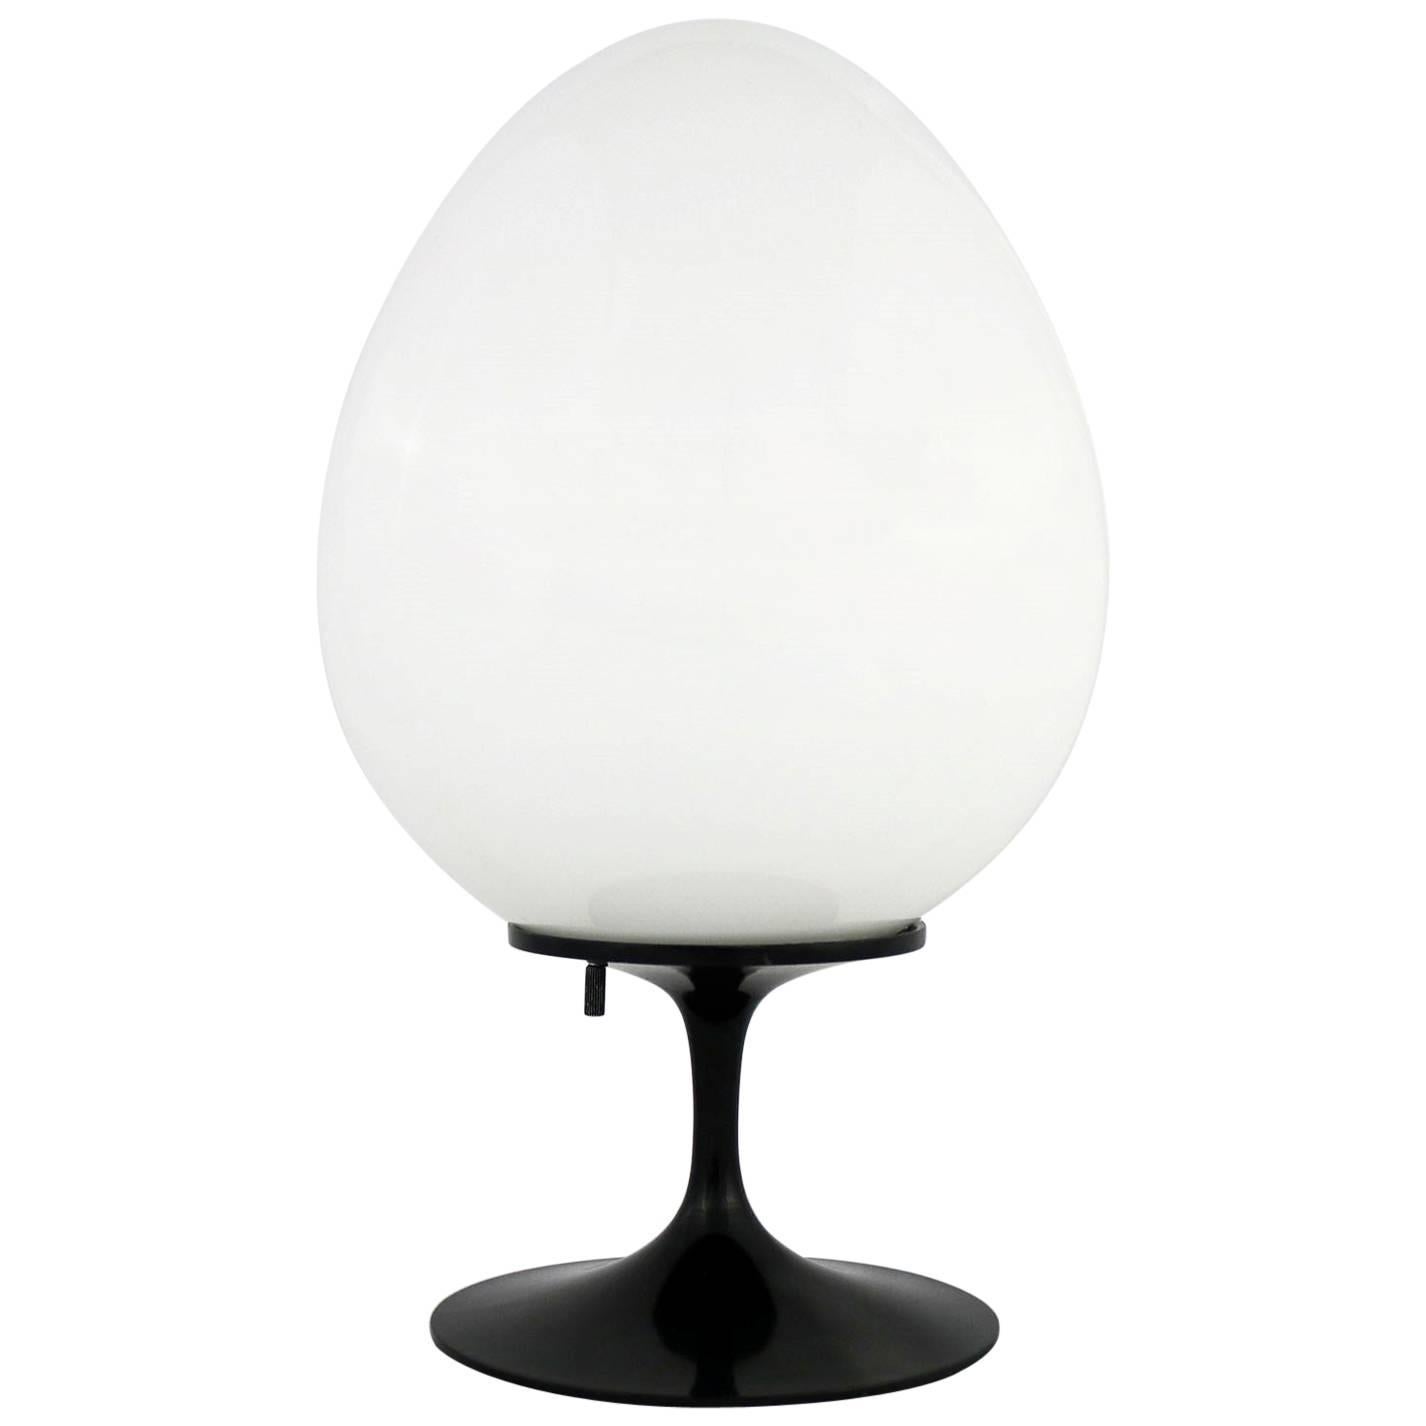 Bill Curry Stemlite Tulip Base Table Lamp for Design Line Egg Shaped White Globe